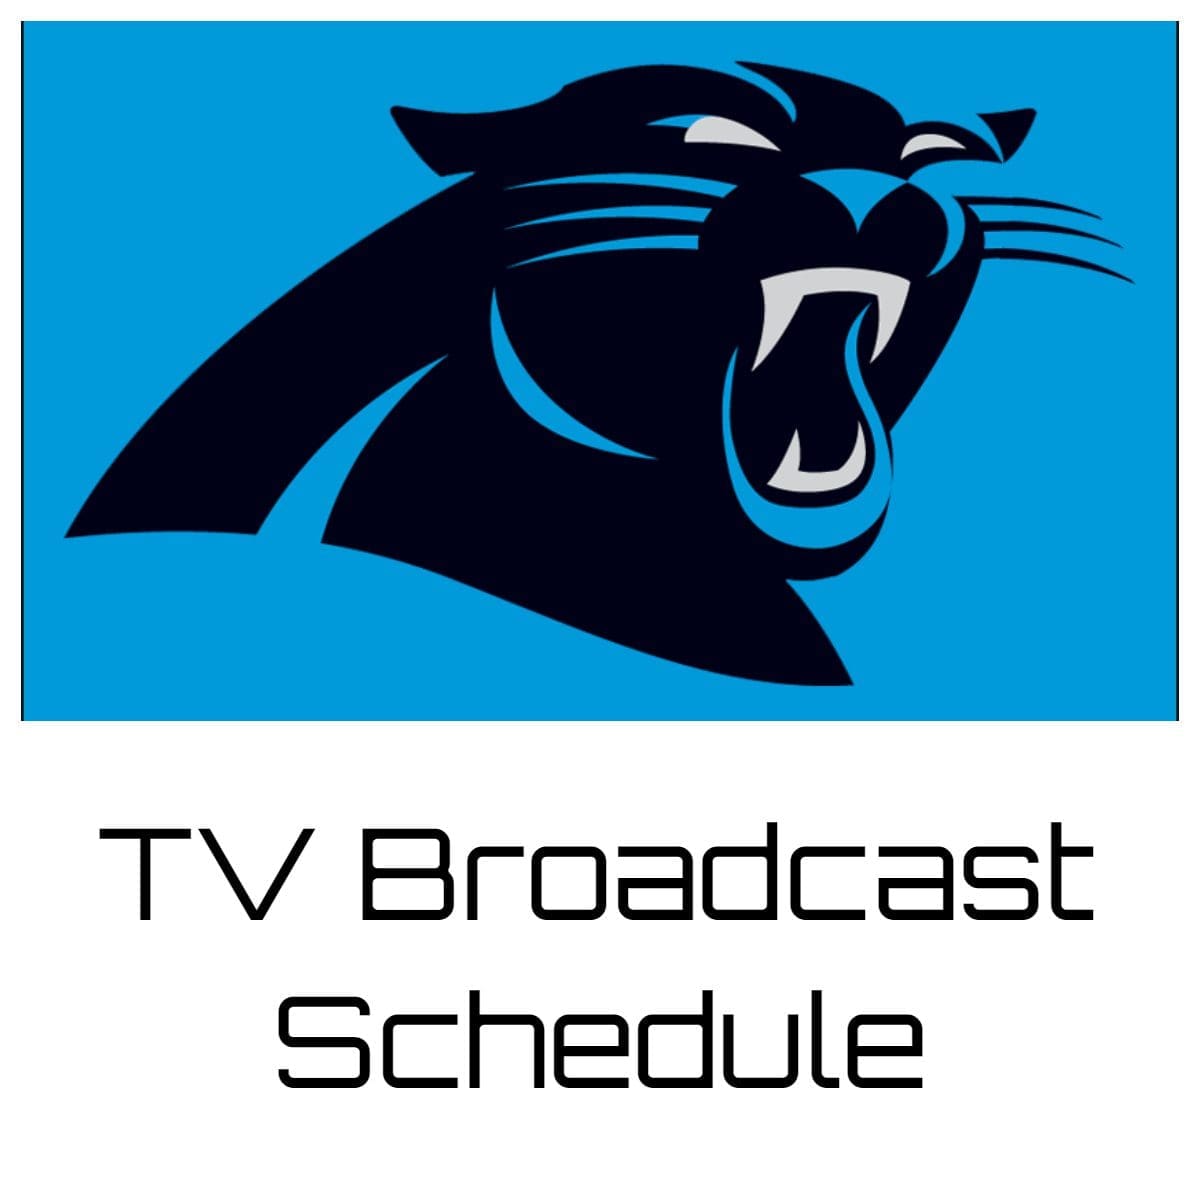 Carolina Panthers TV Broadcast Schedule